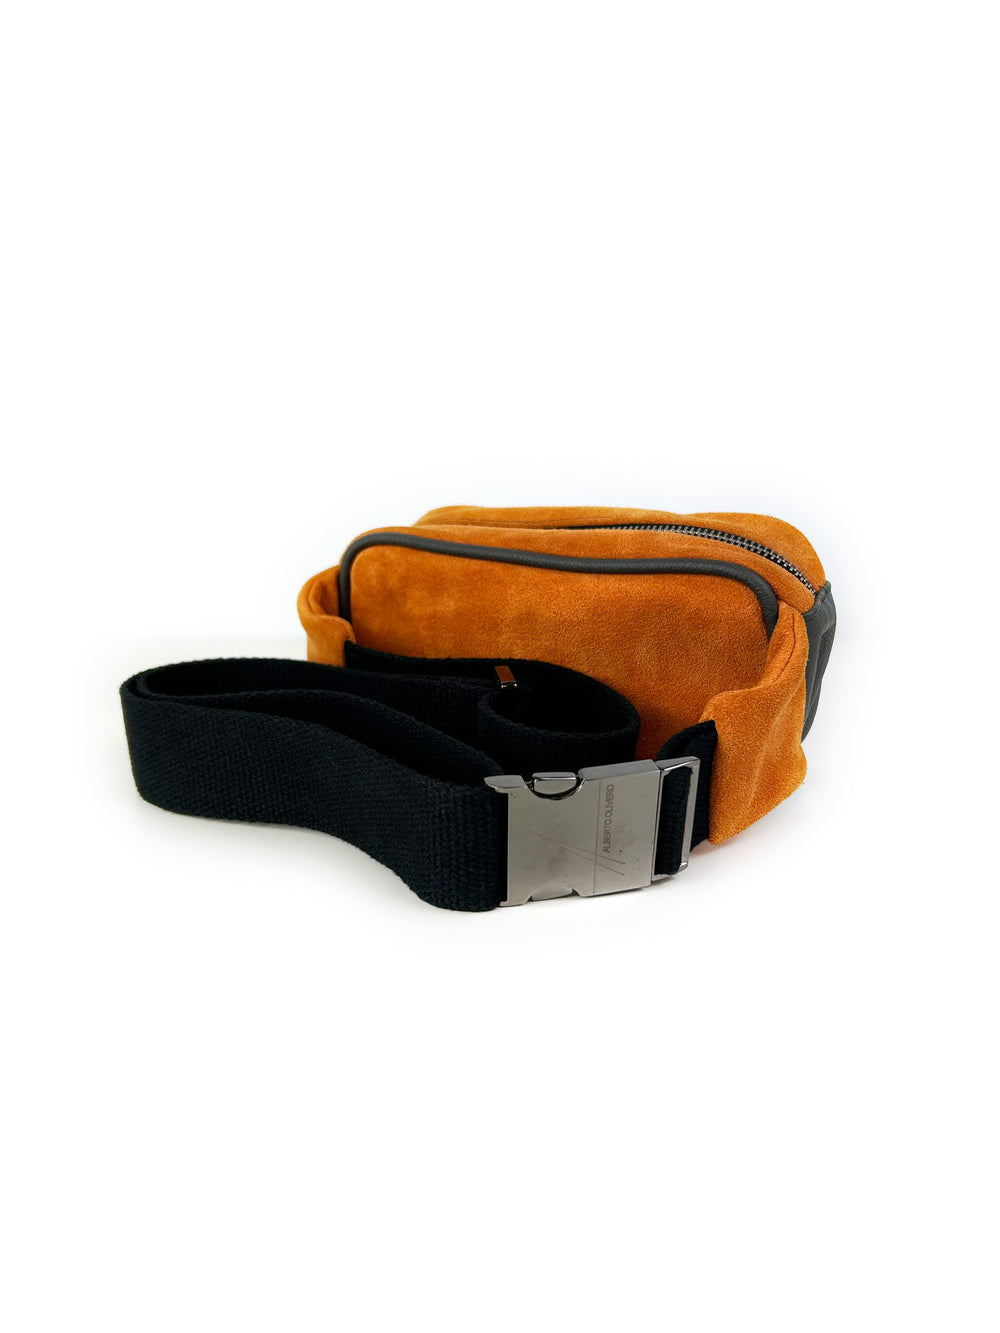 Rust orange suede waist bag with black adjustable strap and metallic buckle